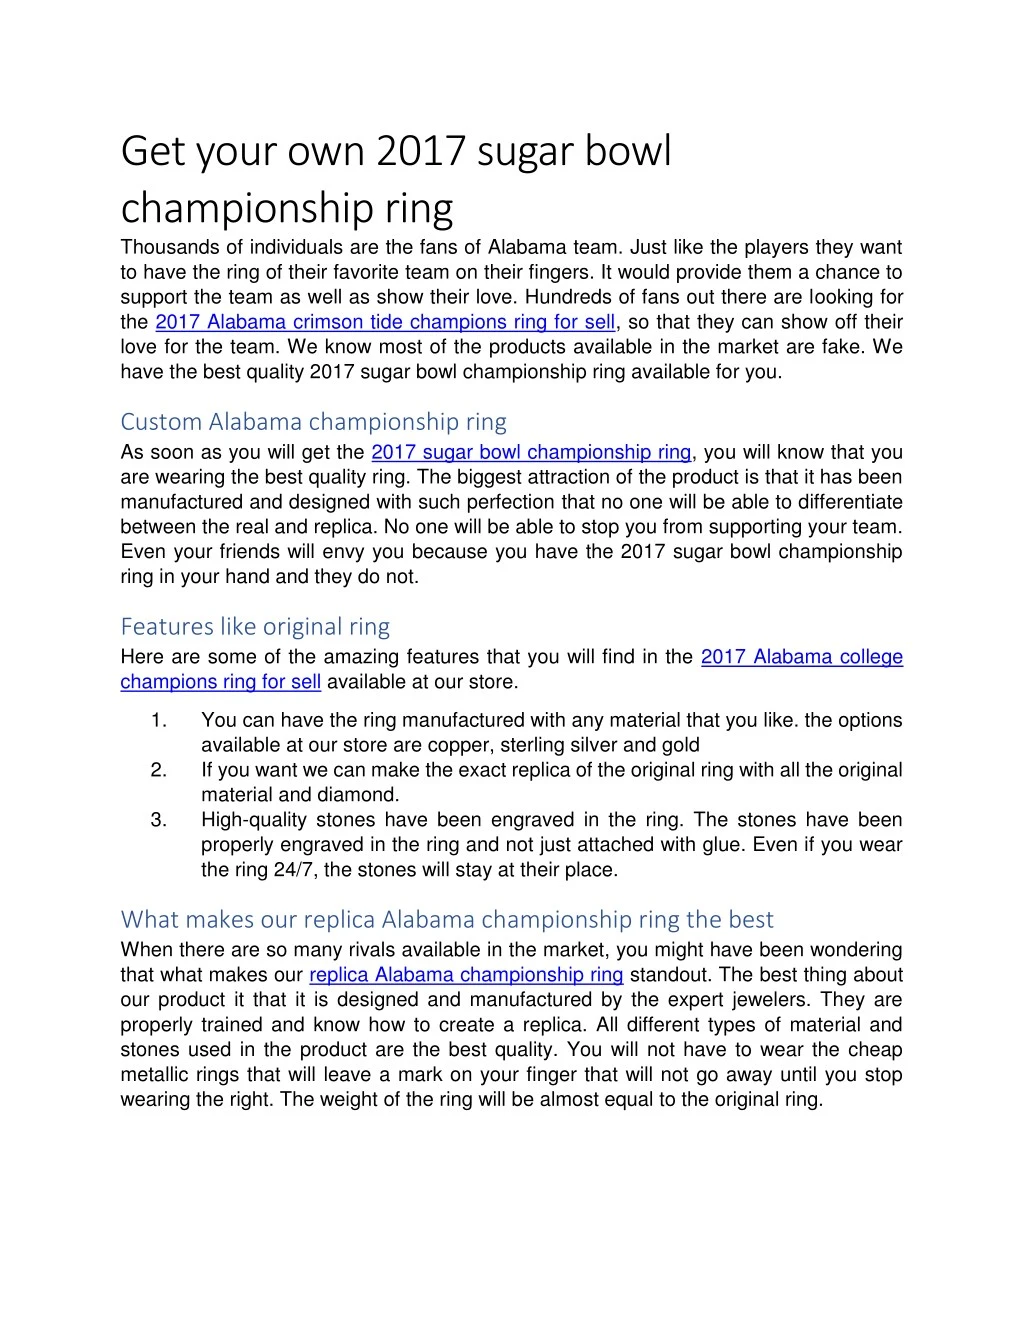 get your own 2017 sugar bowl championship ring n.